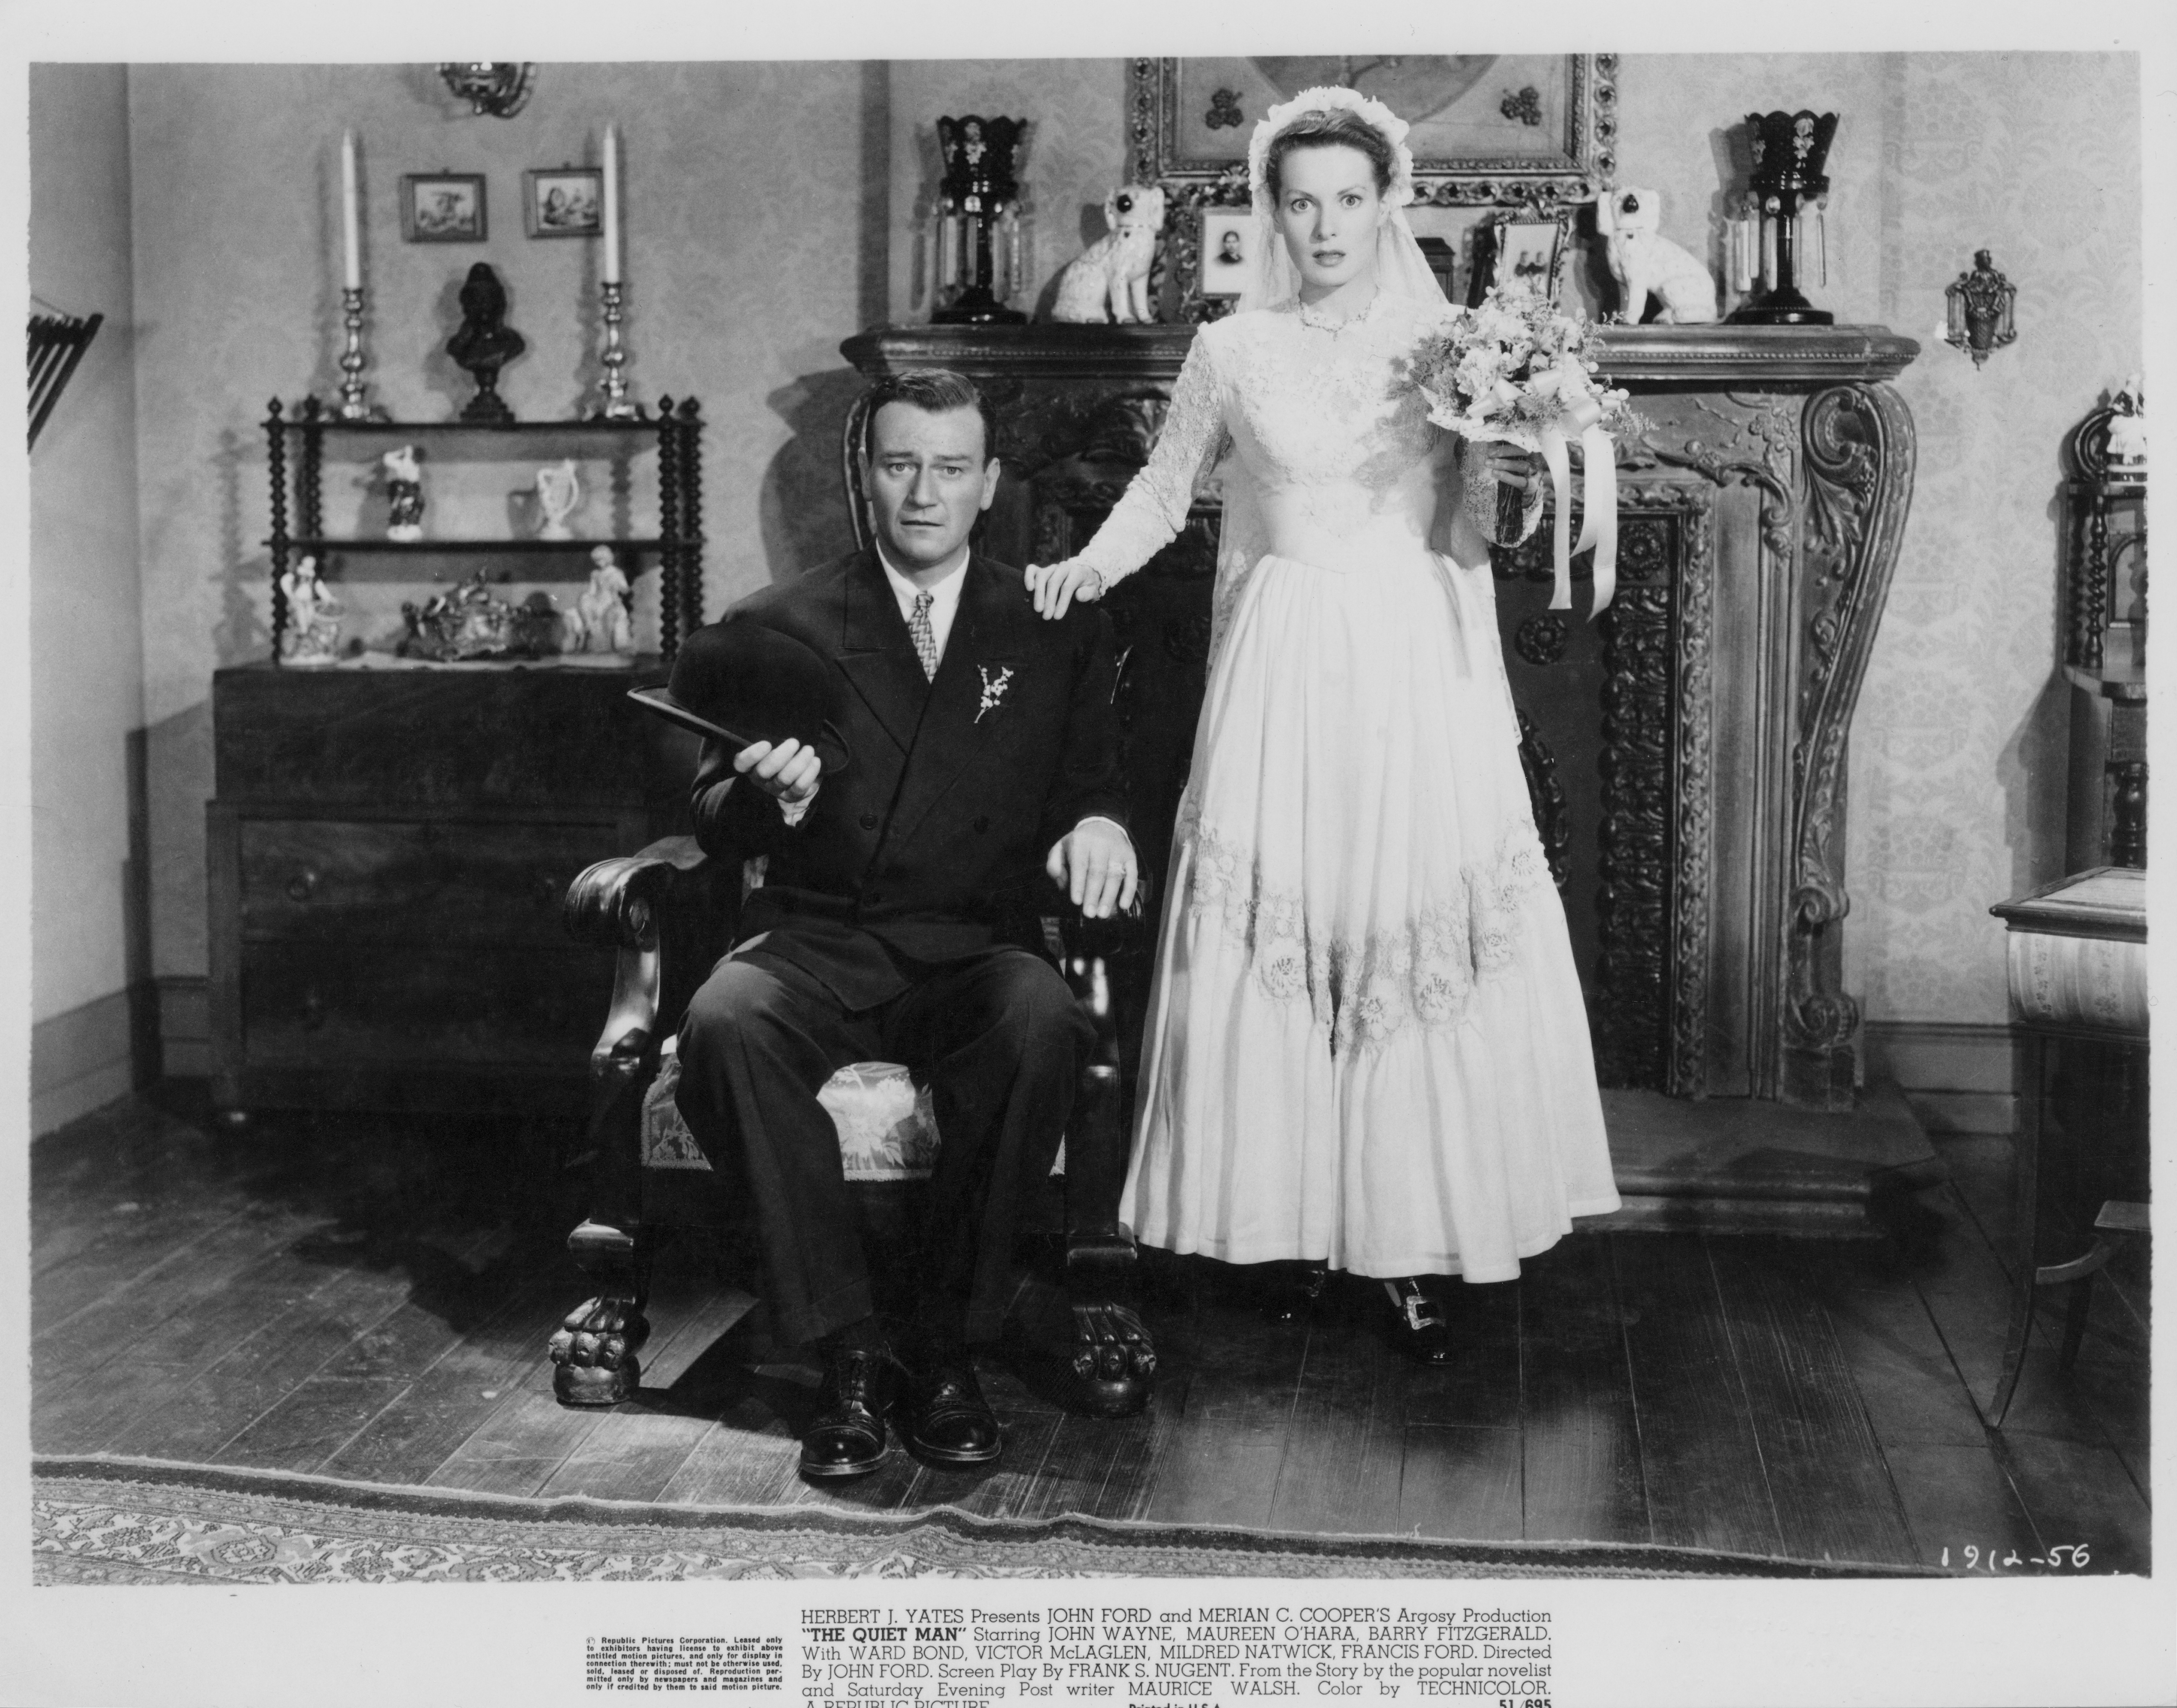 Still of Maureen O'Hara and John Wayne in The Quiet Man (1952)